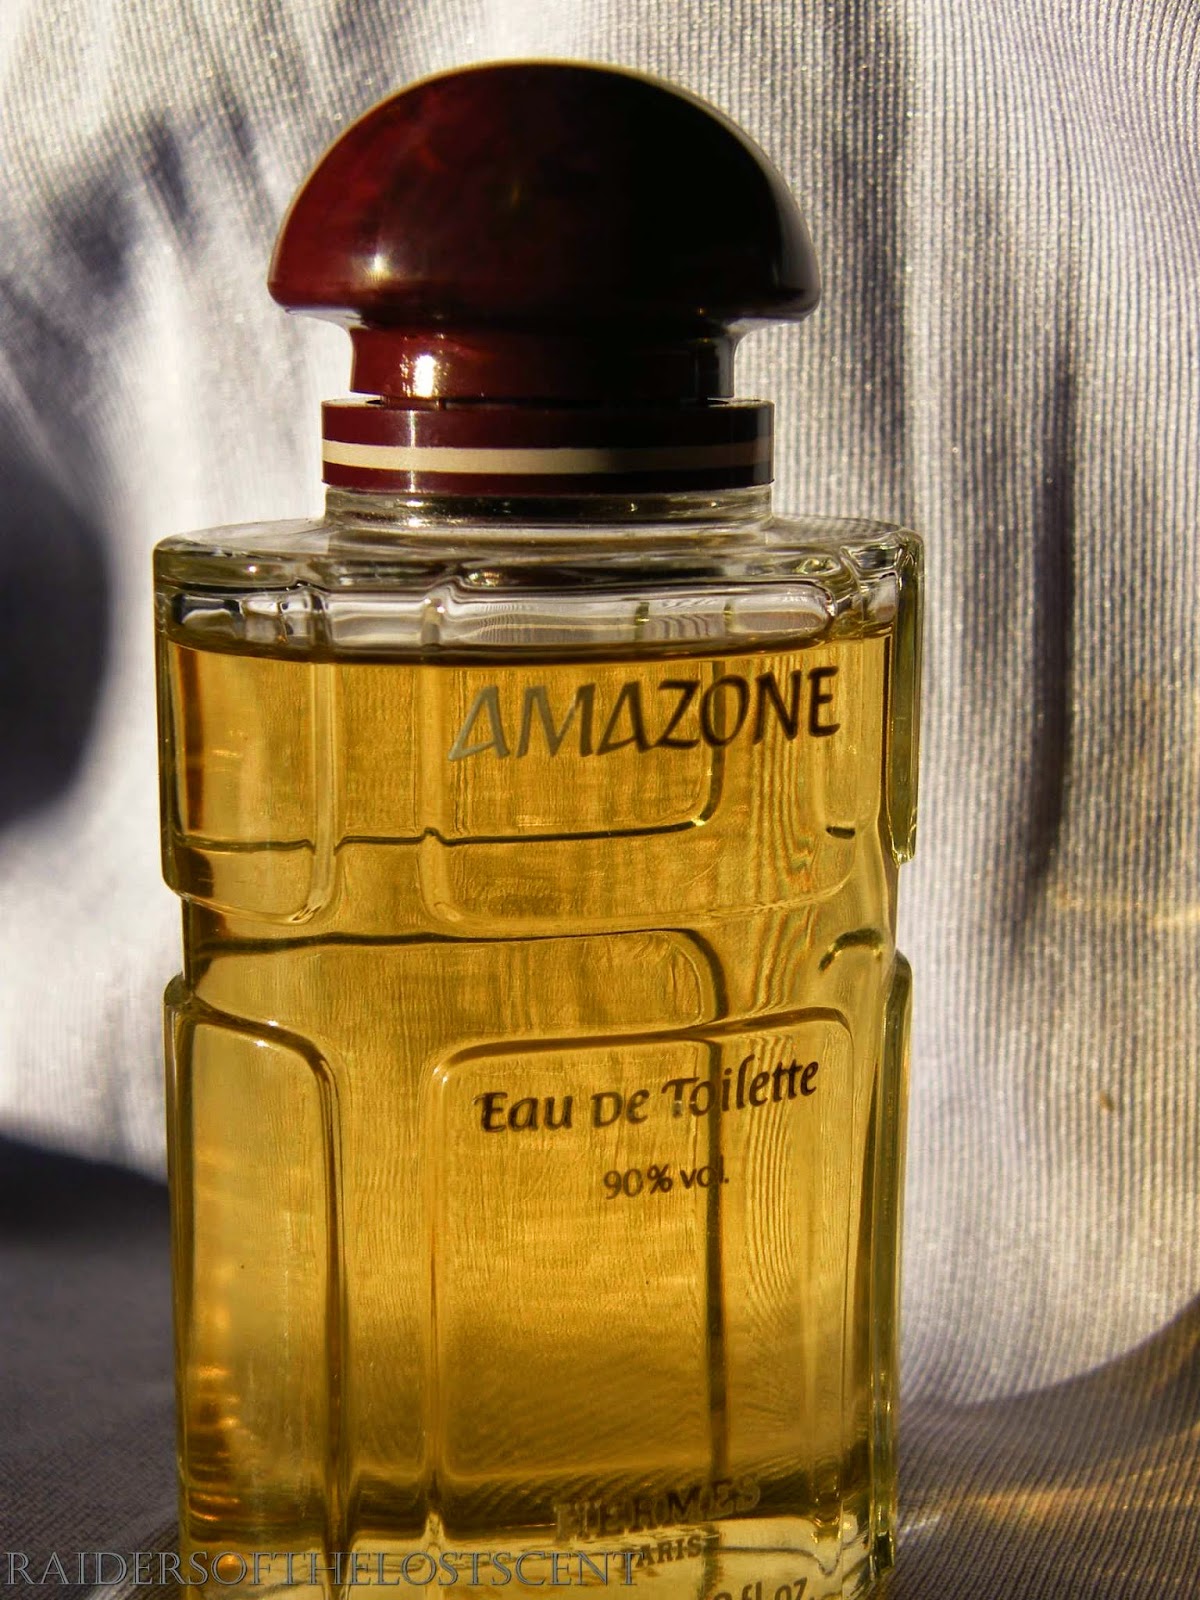 amazone hermes perfume